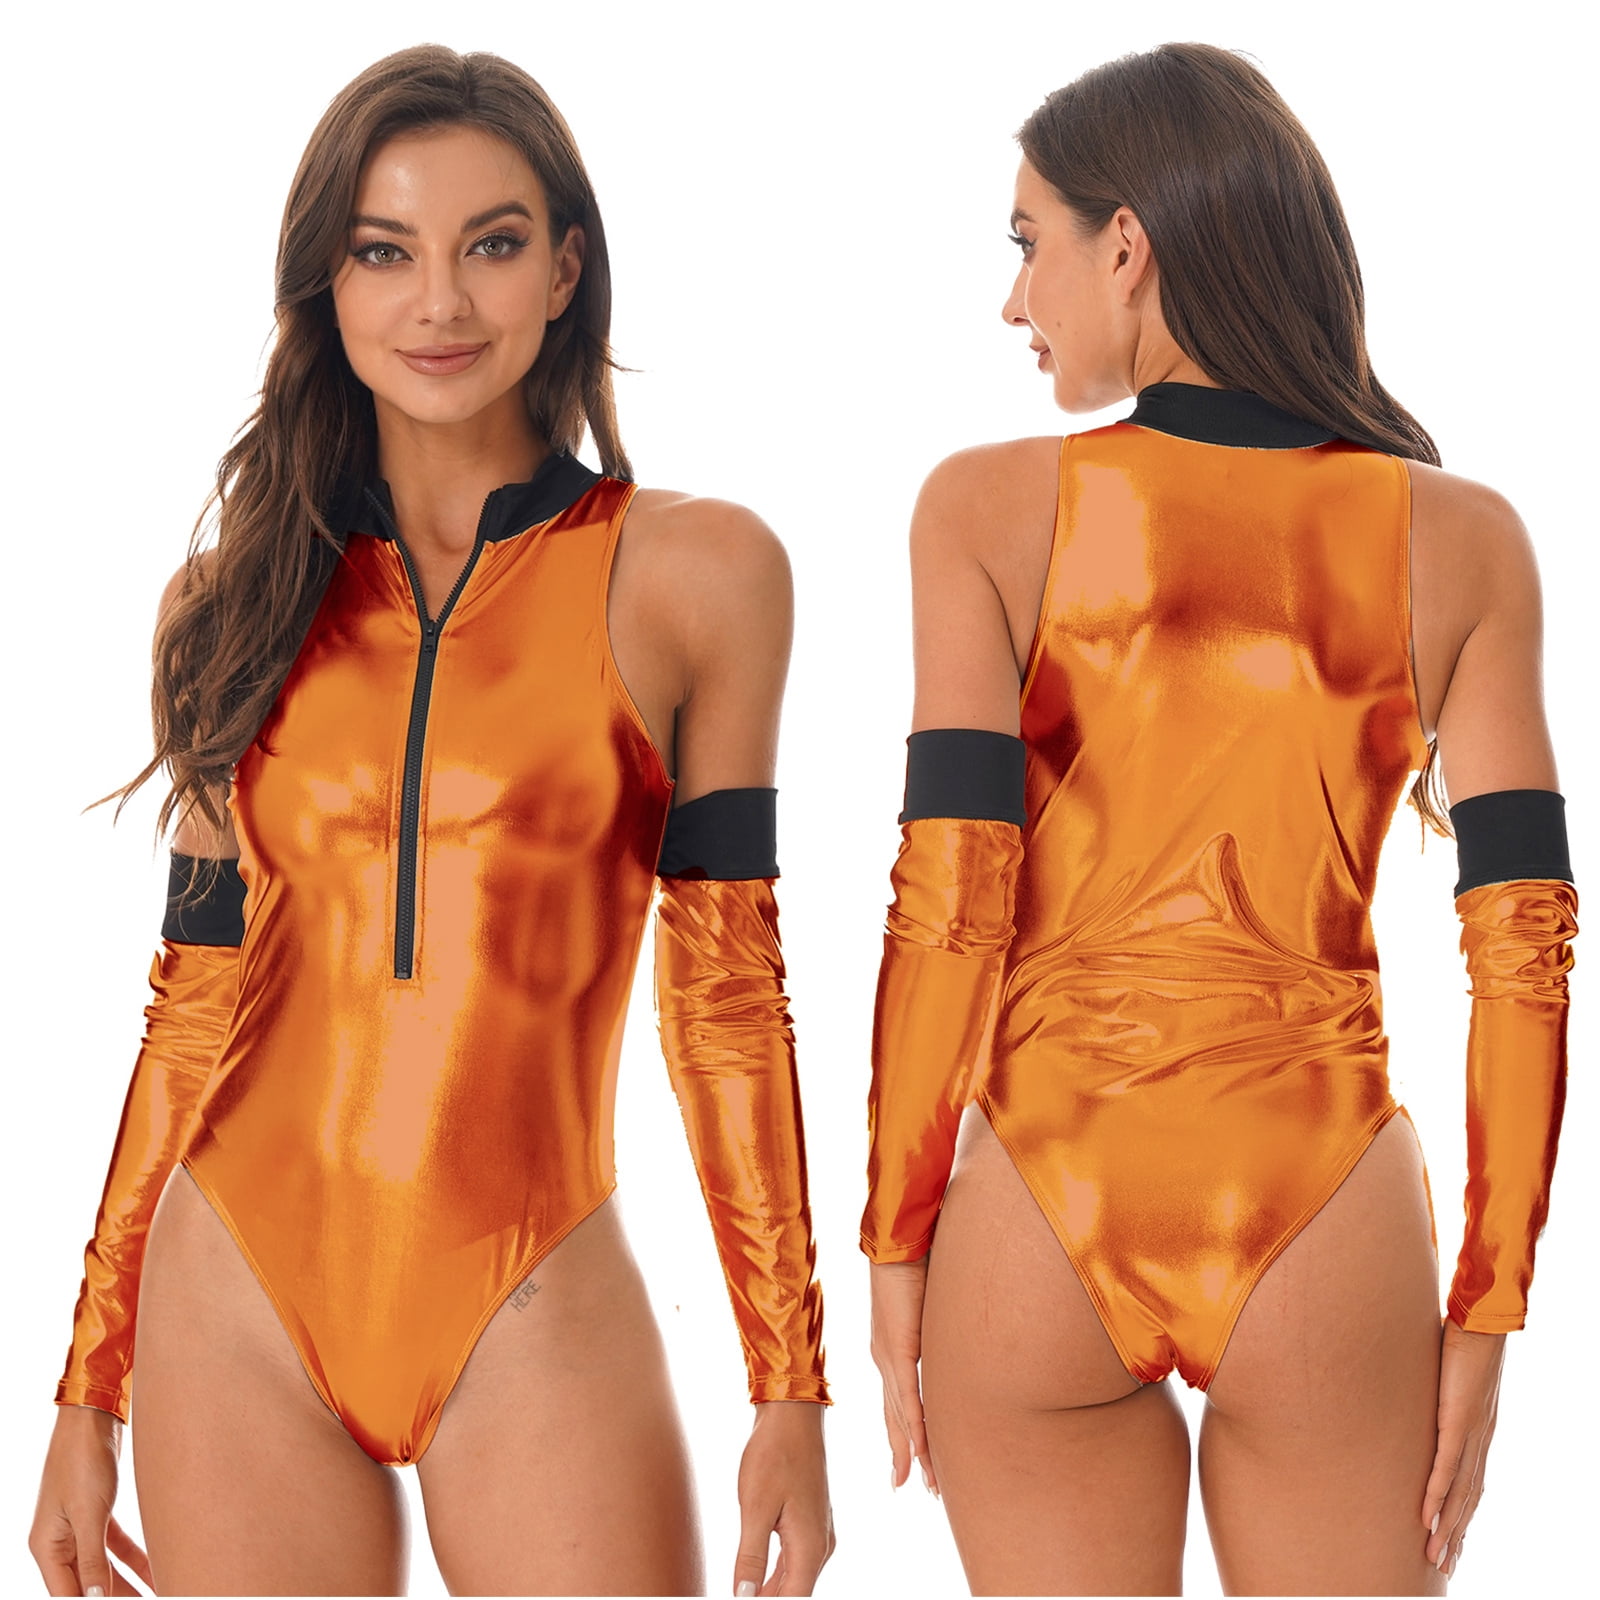 DPOIS Womens Shiny Metallic Bodysuit Astronaut Costume Colorful XL